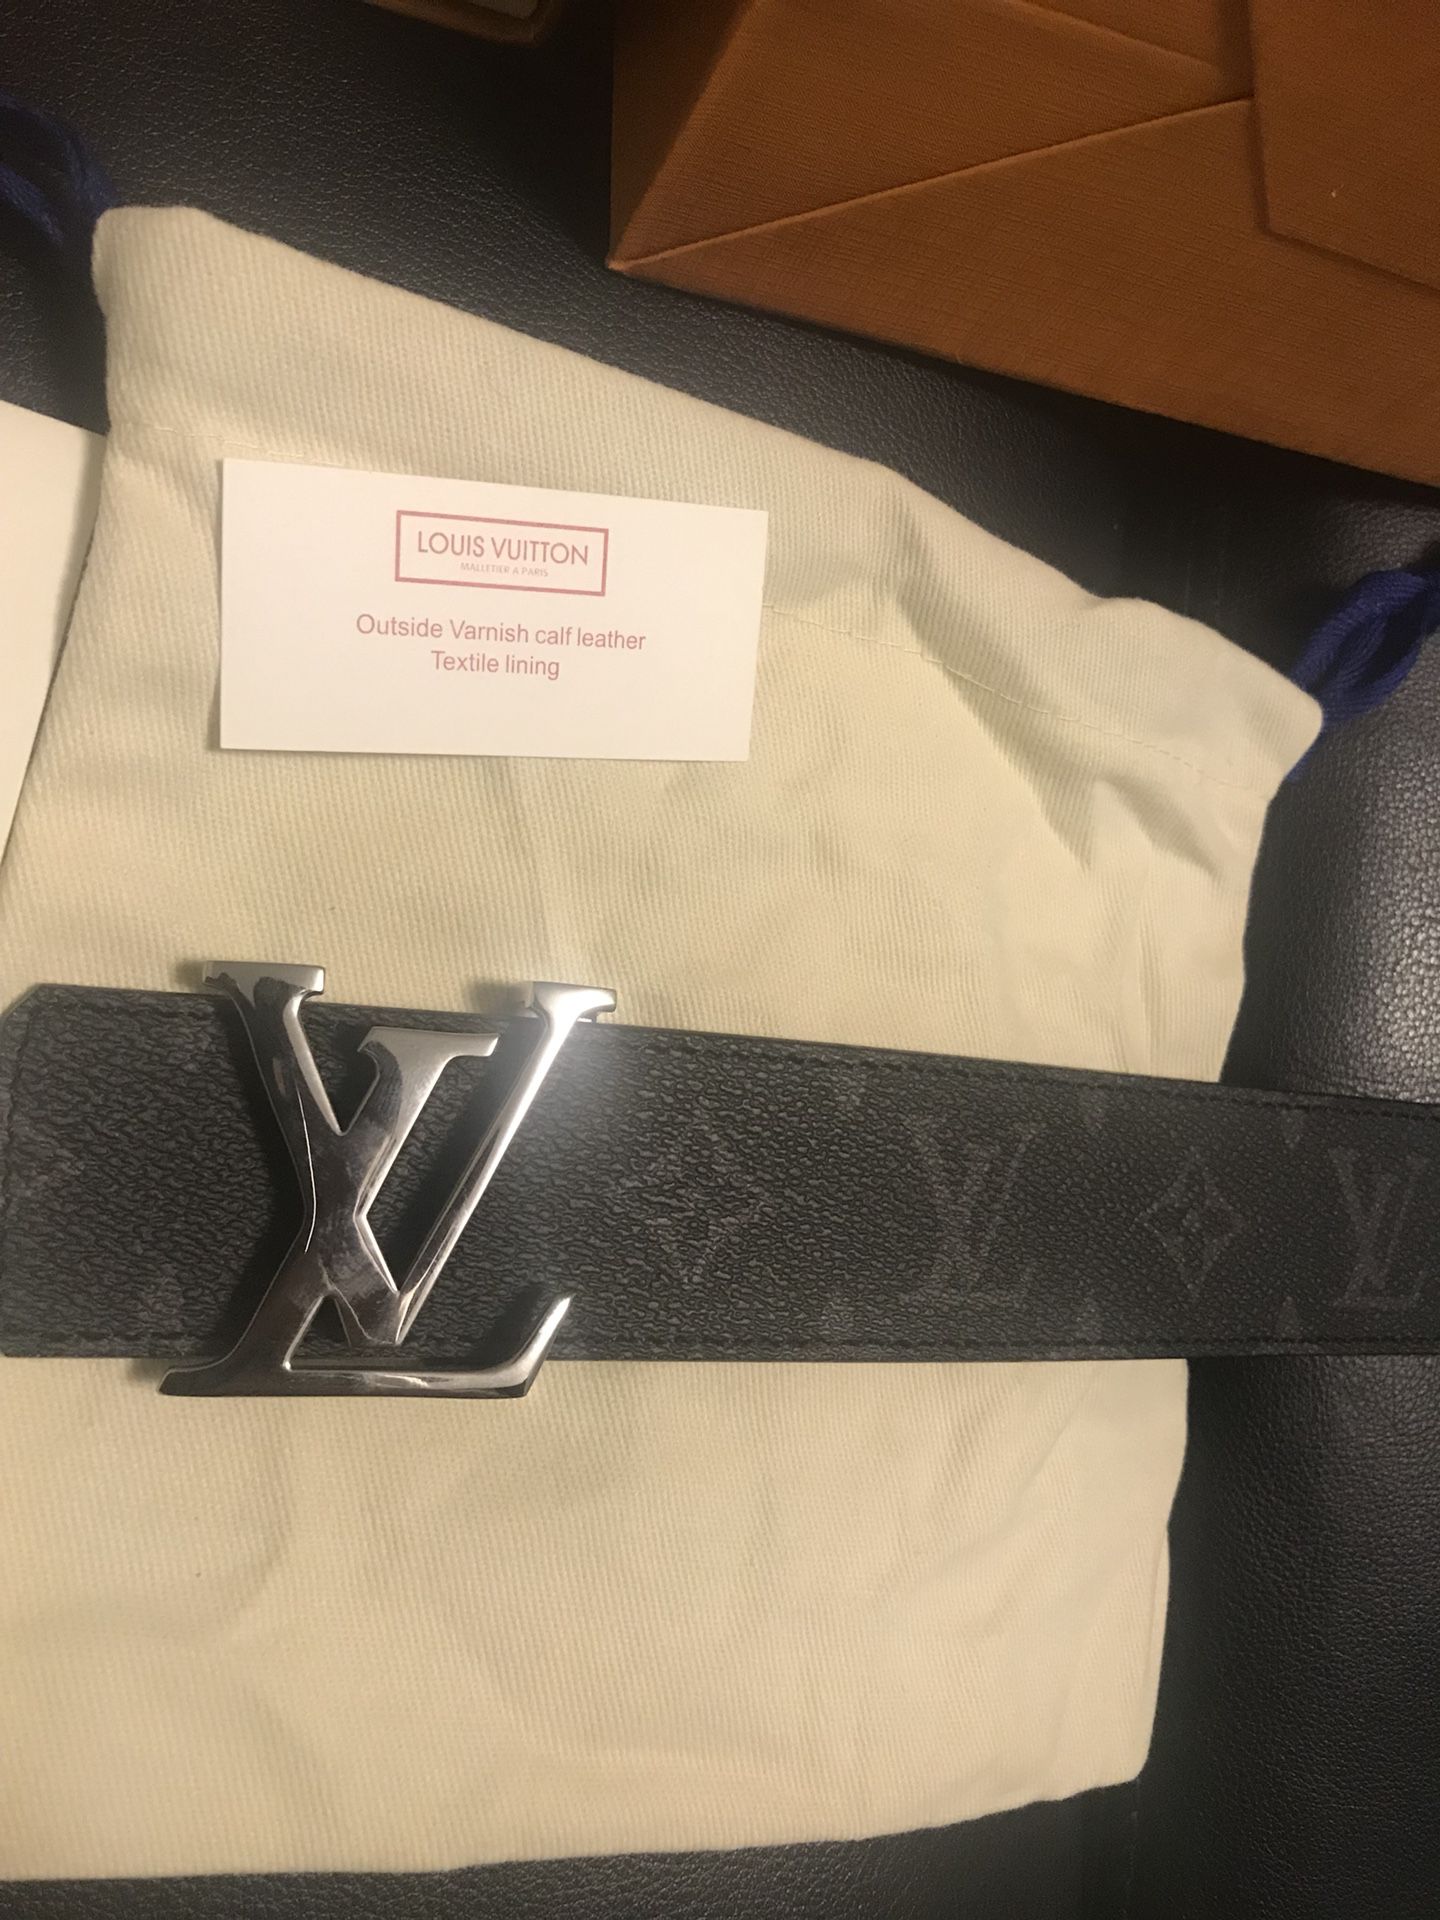 Authentic Louis Vuitton Black Monogram LV Initiales Reversible Belt